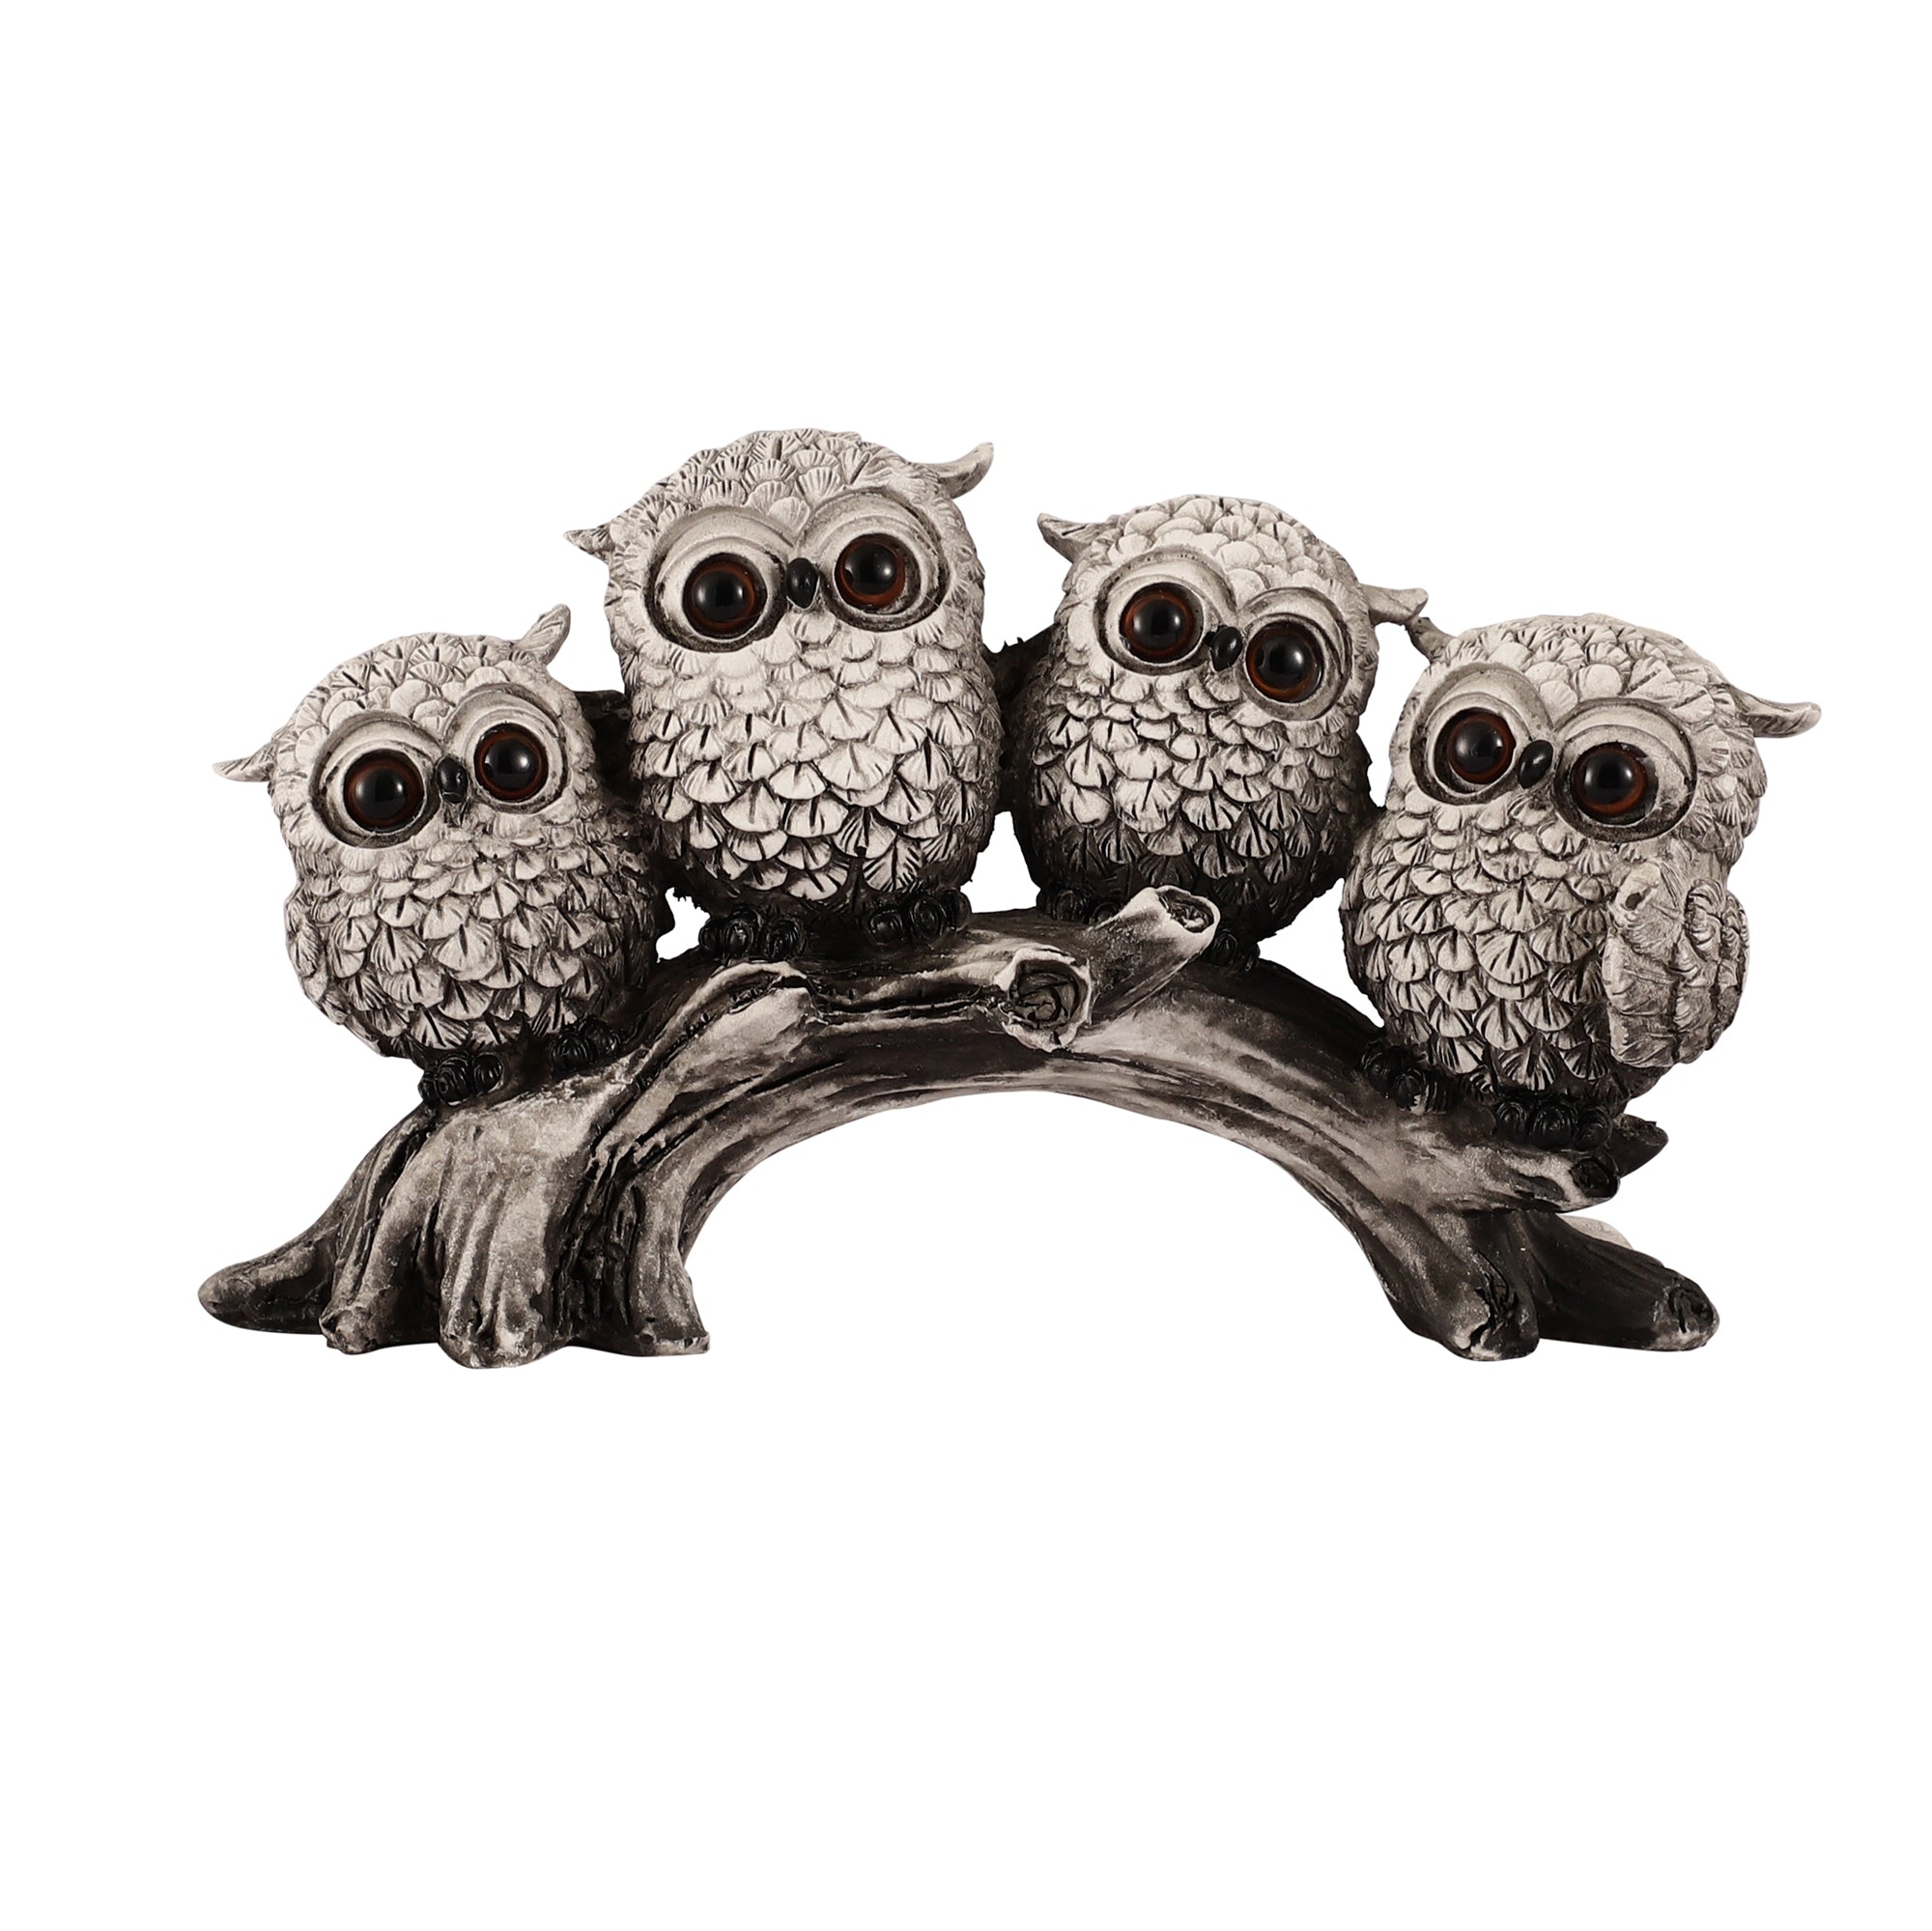 The Four Owl Family